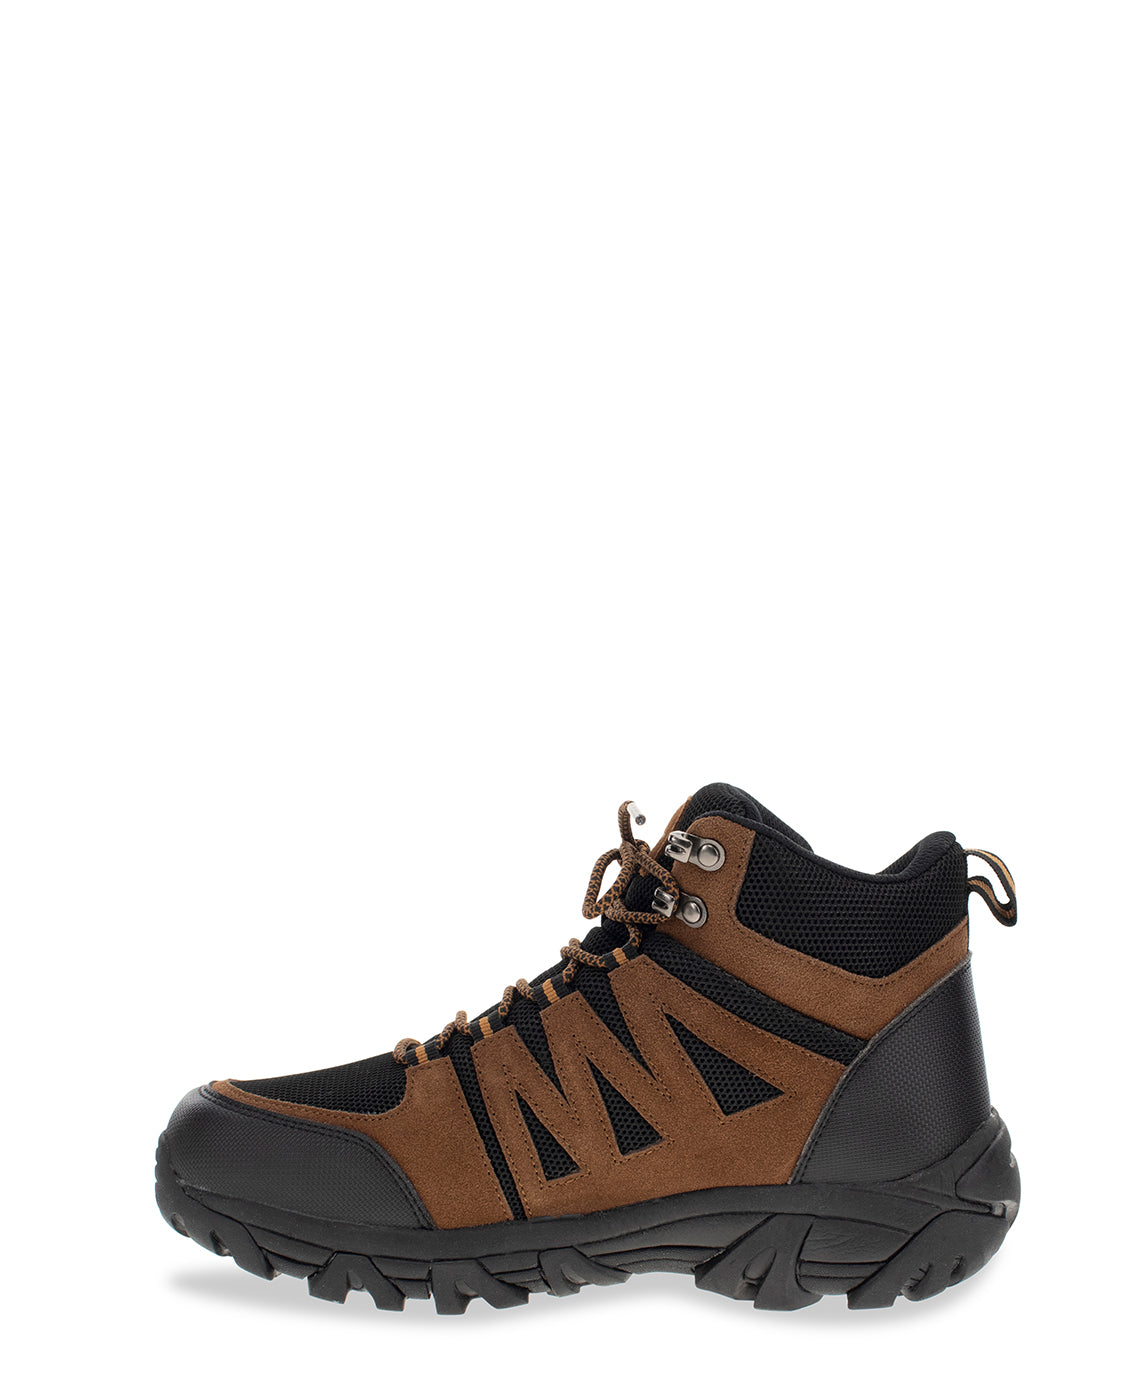 Men's Trailscape Hiker Boot - Brown